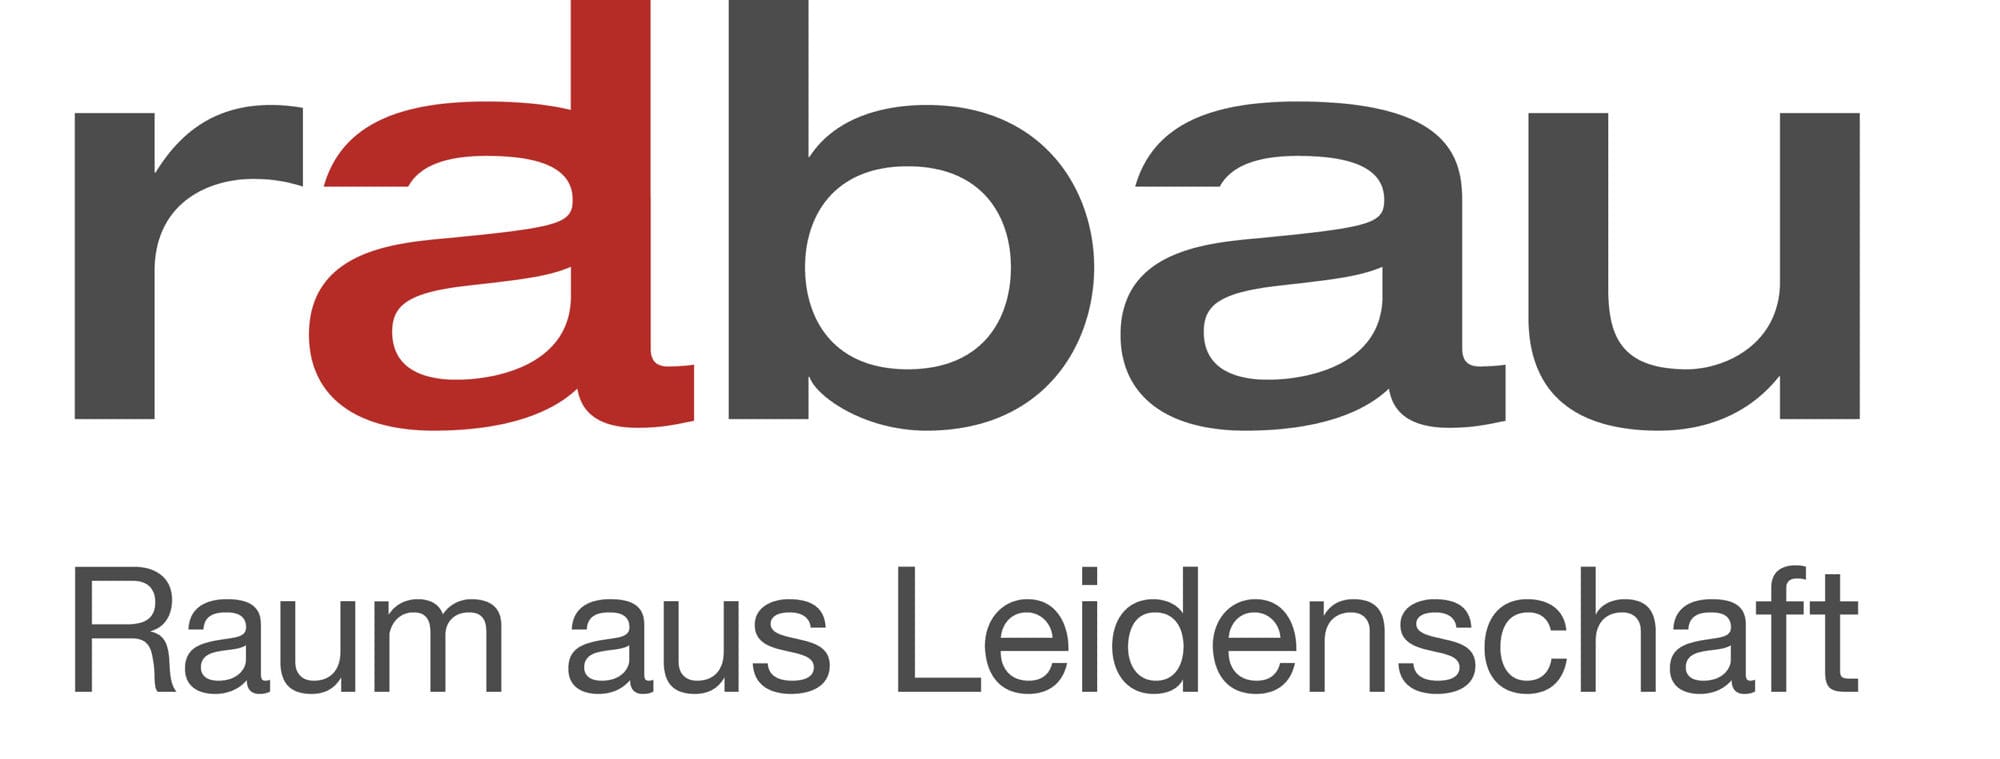 Die Ralbau AG ist neuer Sponsor des EHC Arosa.